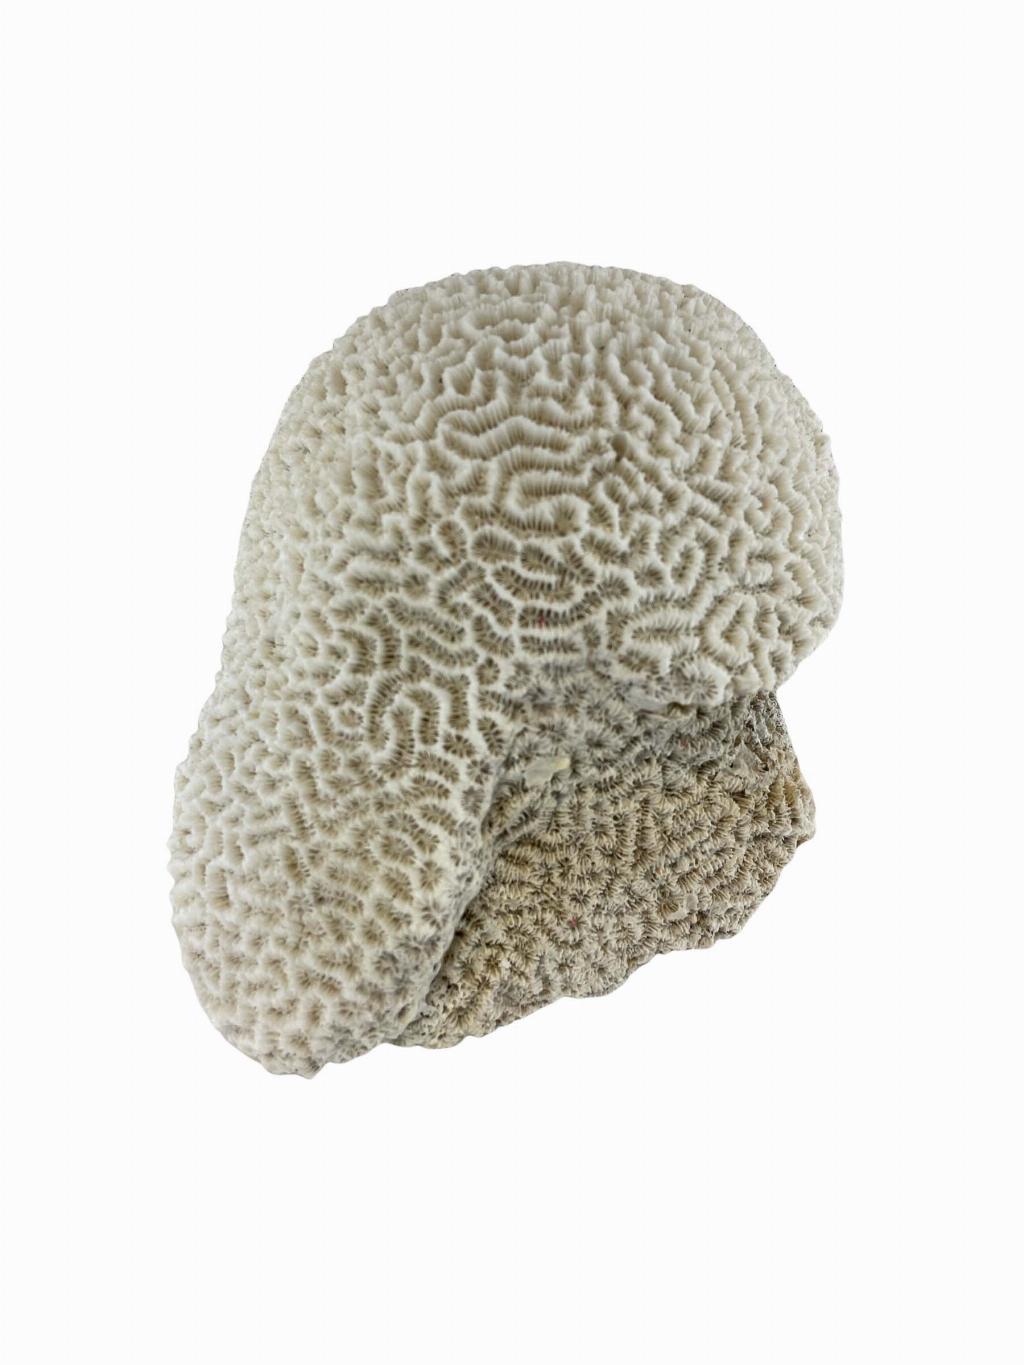 Large Brain Coral Specimen